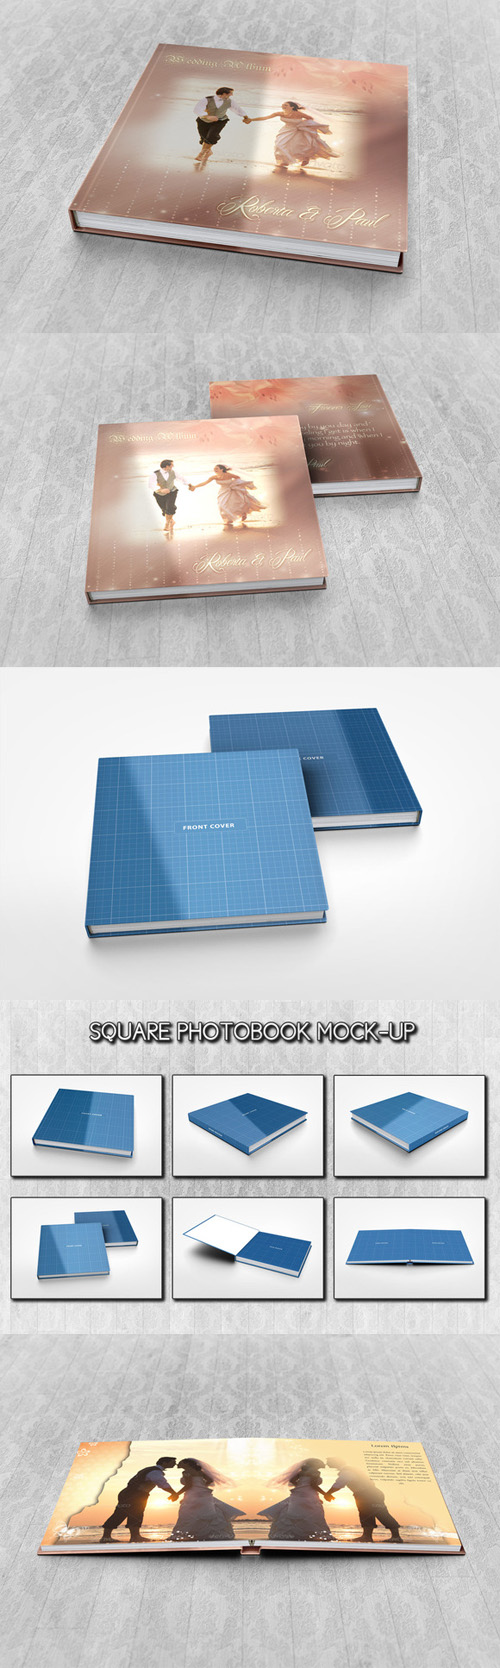 CreativeMarket - Square Photobook Mock-up 37516